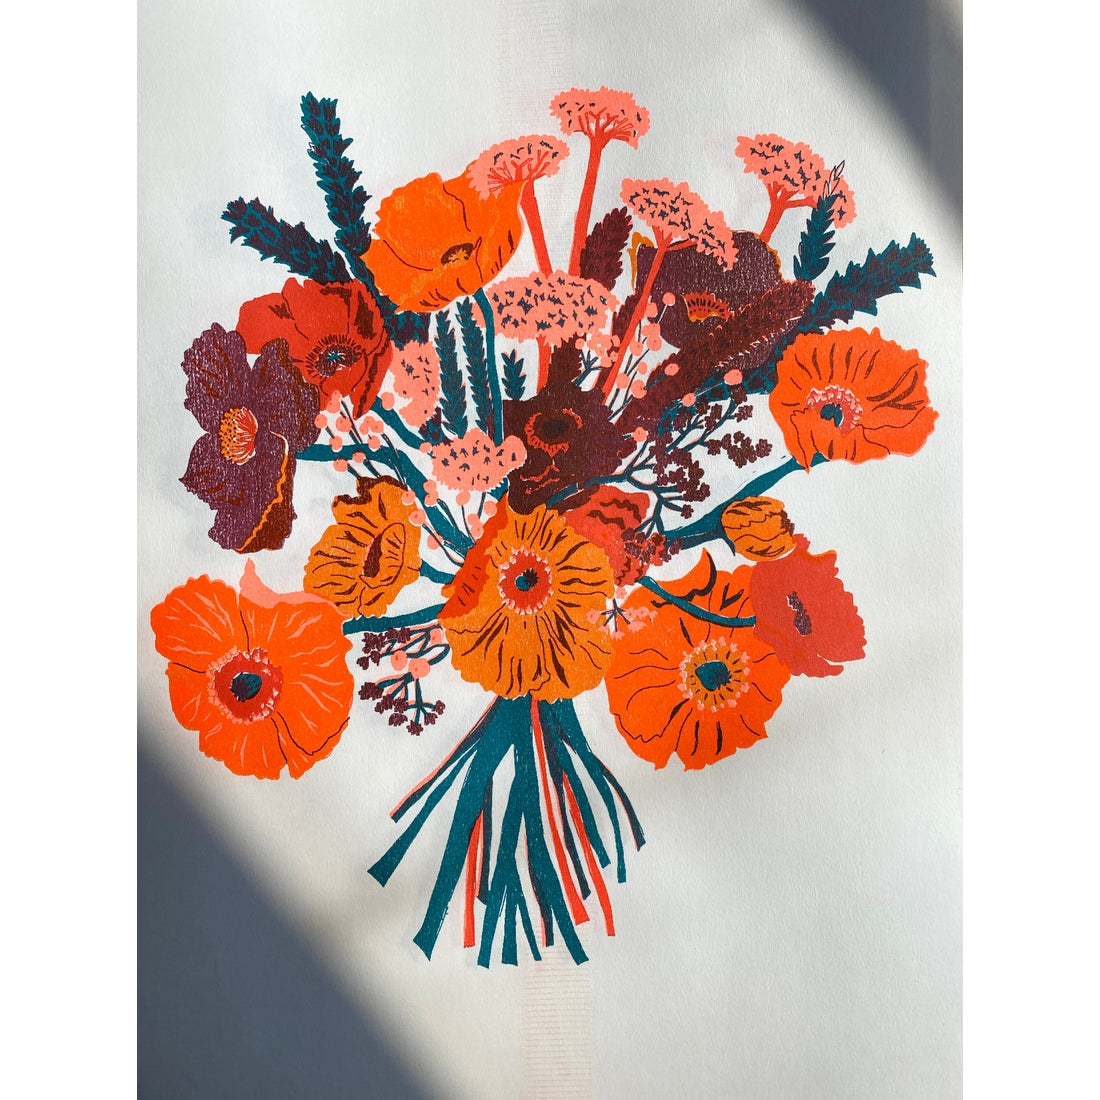 Floral A3 Print